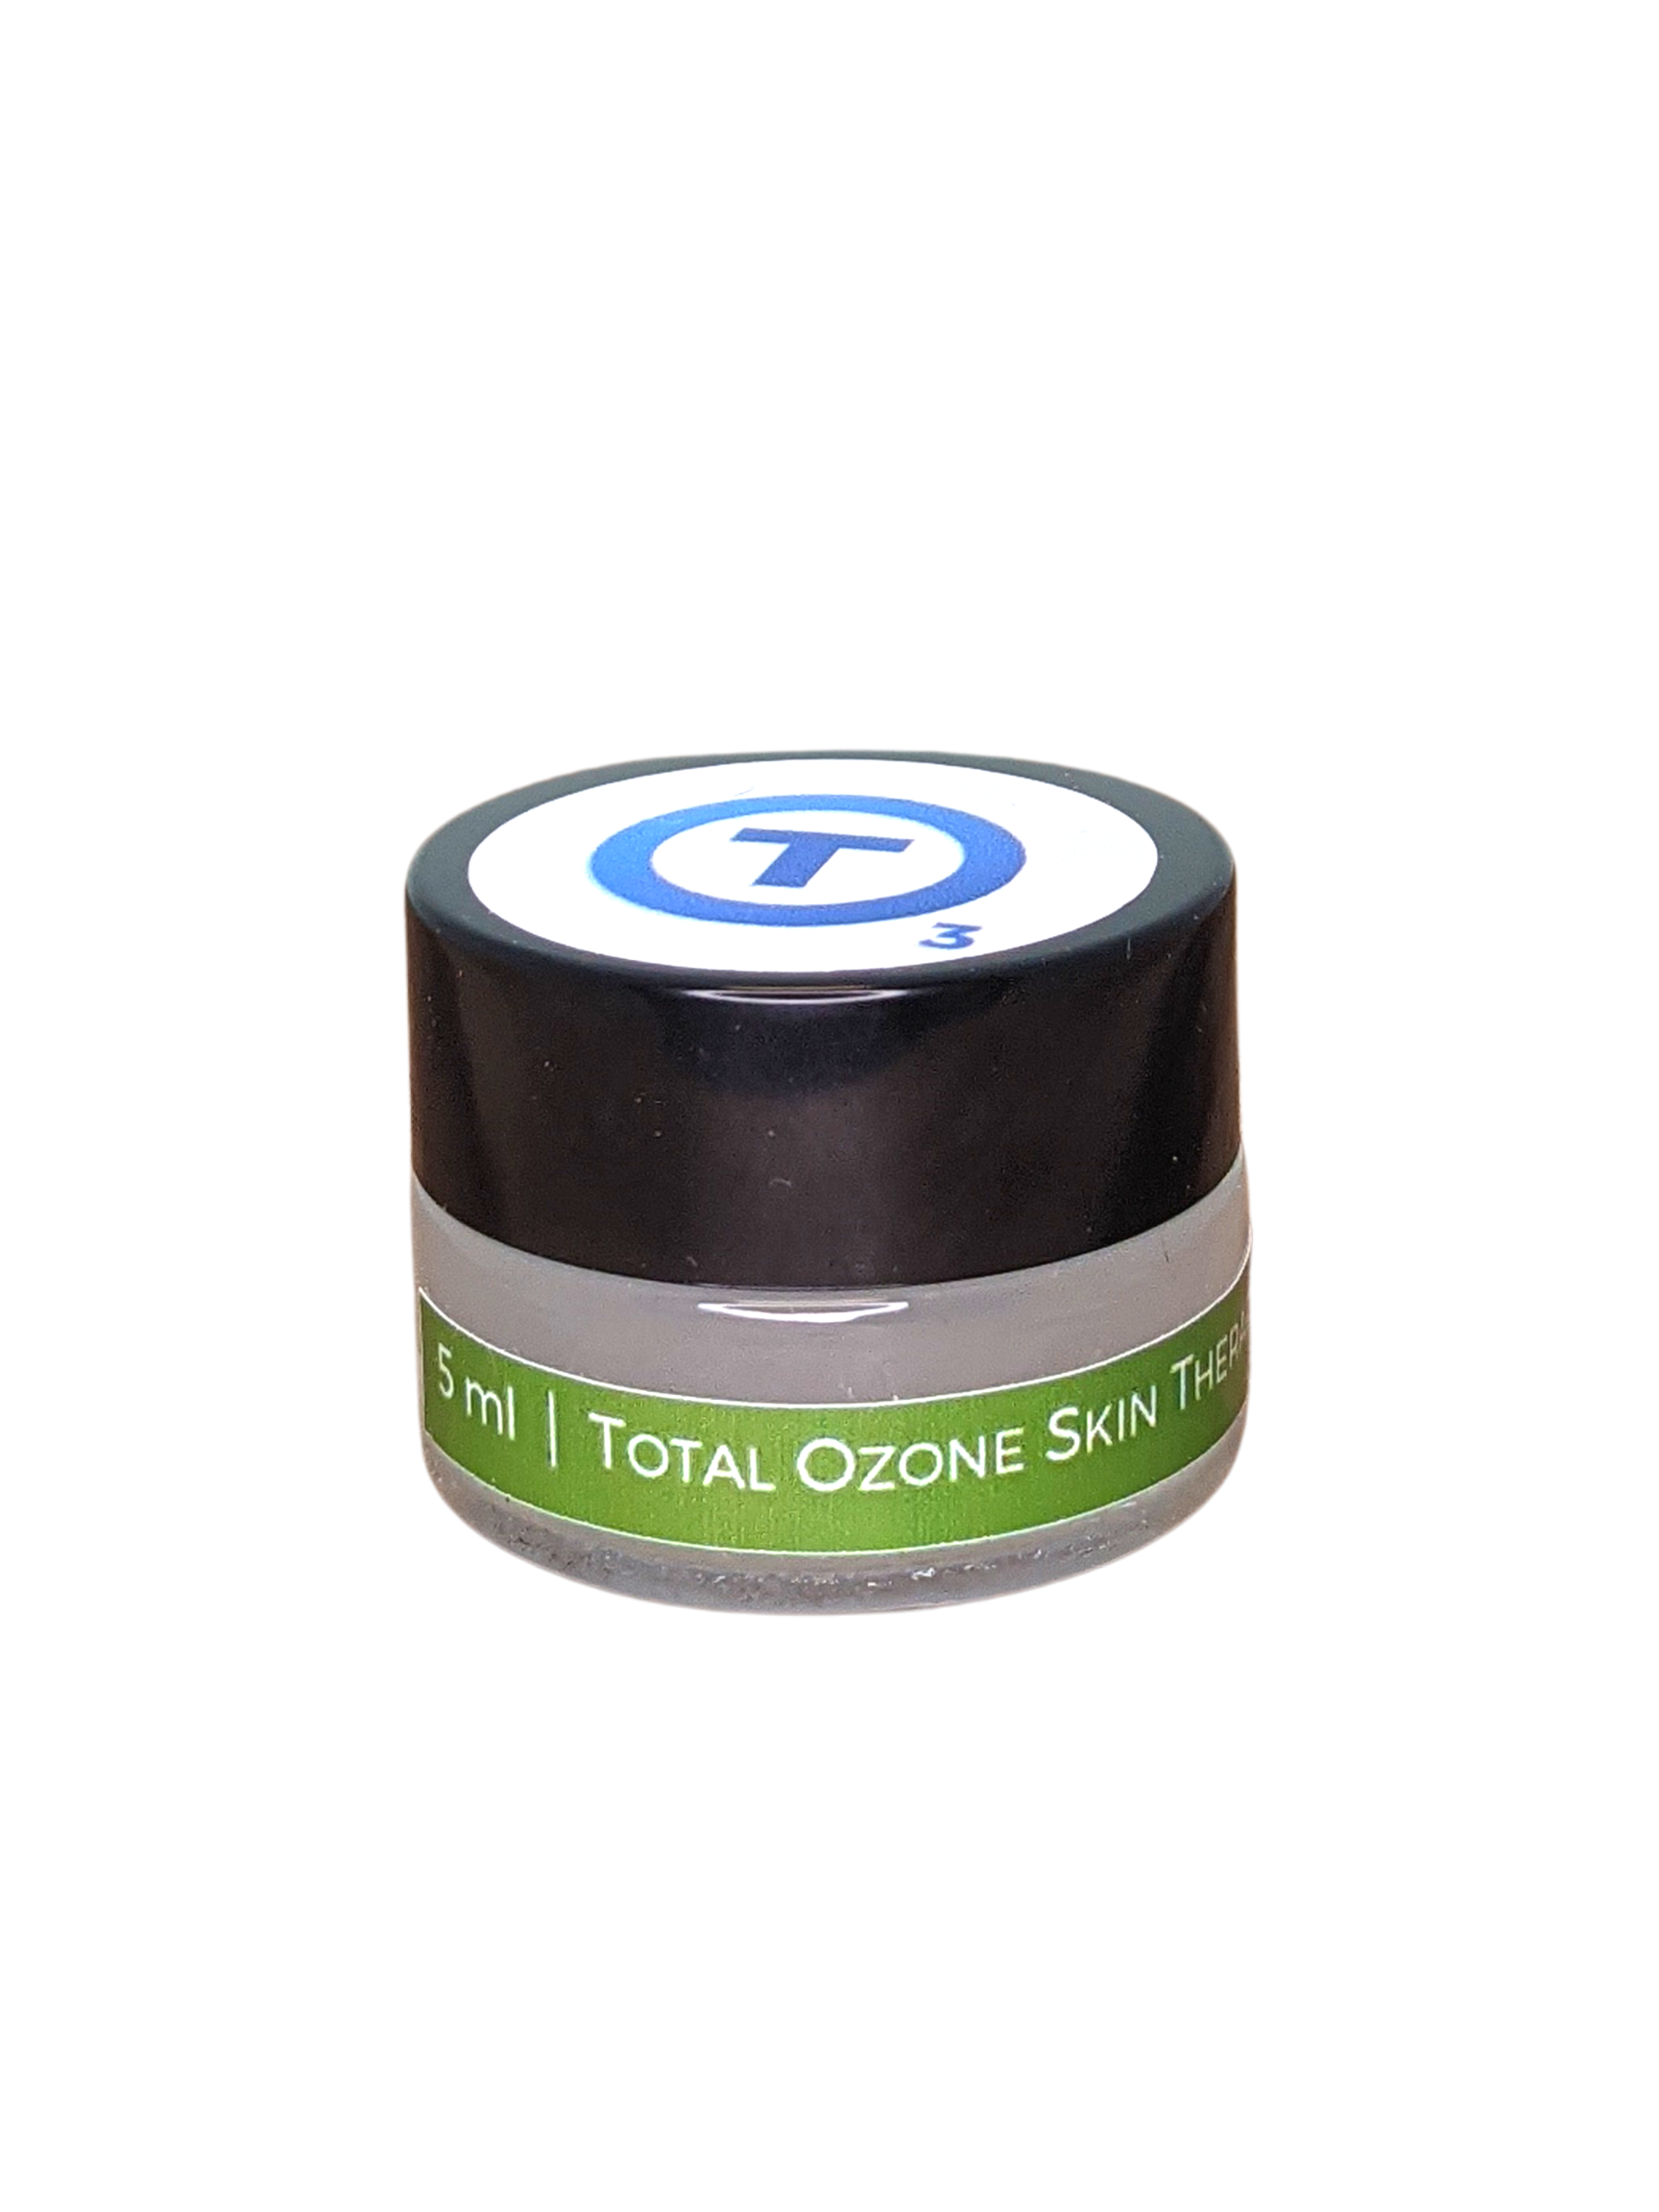 Total Ozone Skin Therapy - Olive Oil Ozone Balm